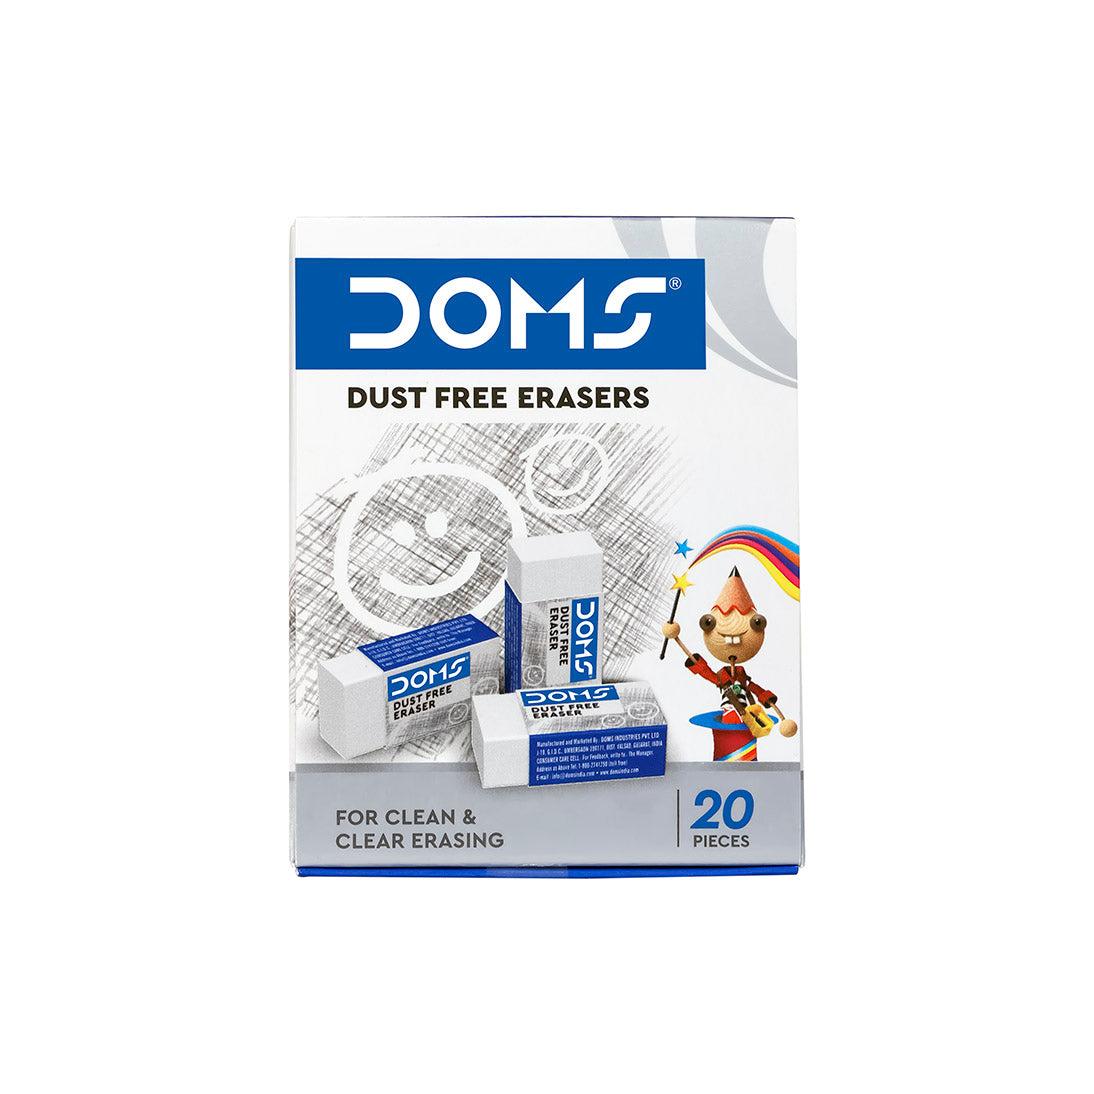 DOMS Dust Free Eraser Box 20 Pcs